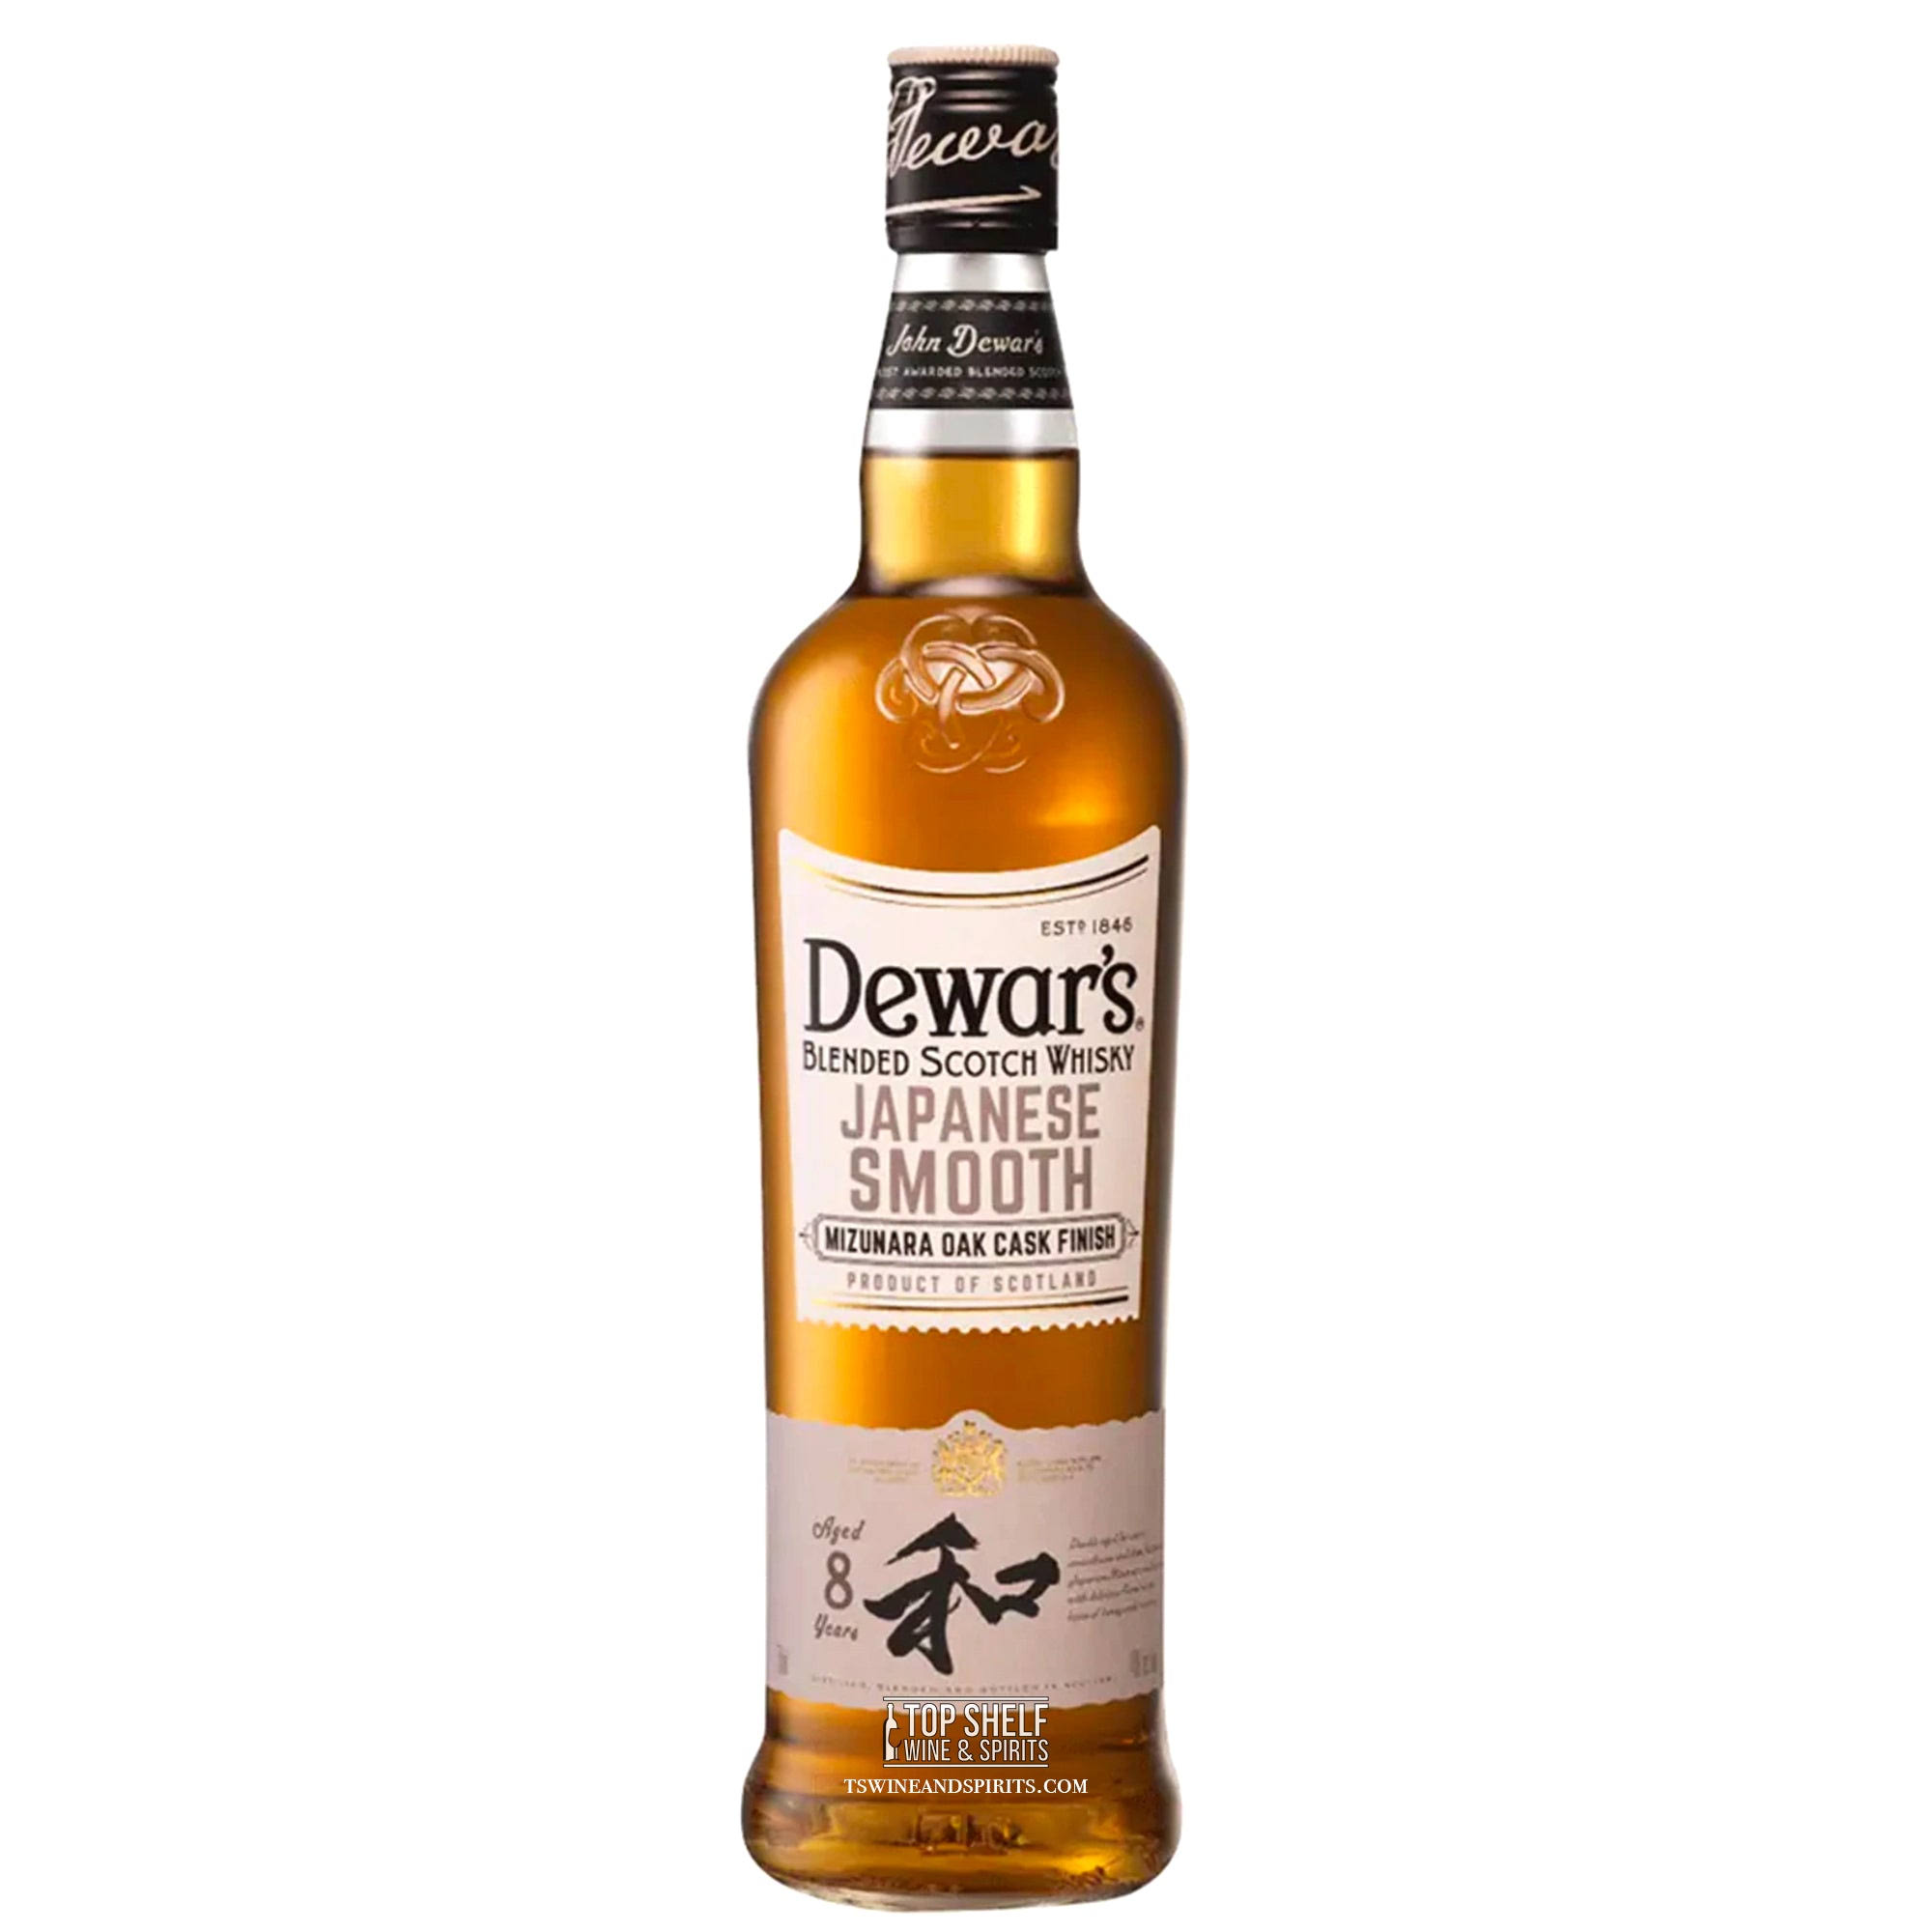 Dewar's Japanese Smooth 8 Year Scotch Whisky 750ml